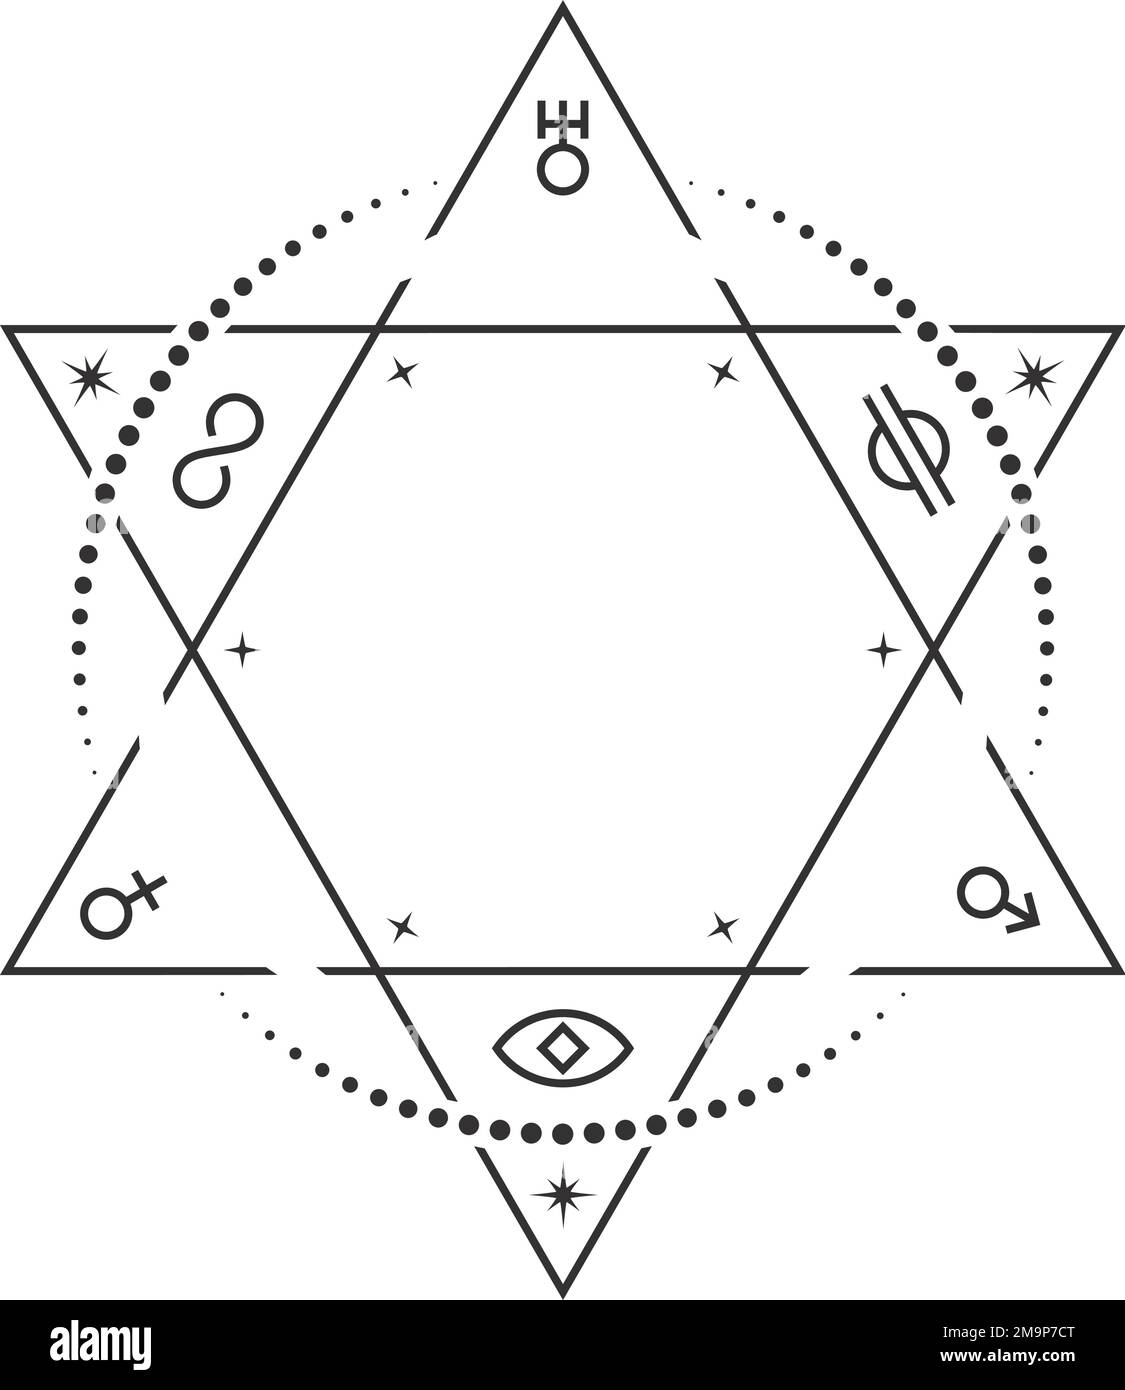 Alchemy star template. Celestial astrology line symbol Stock Vector